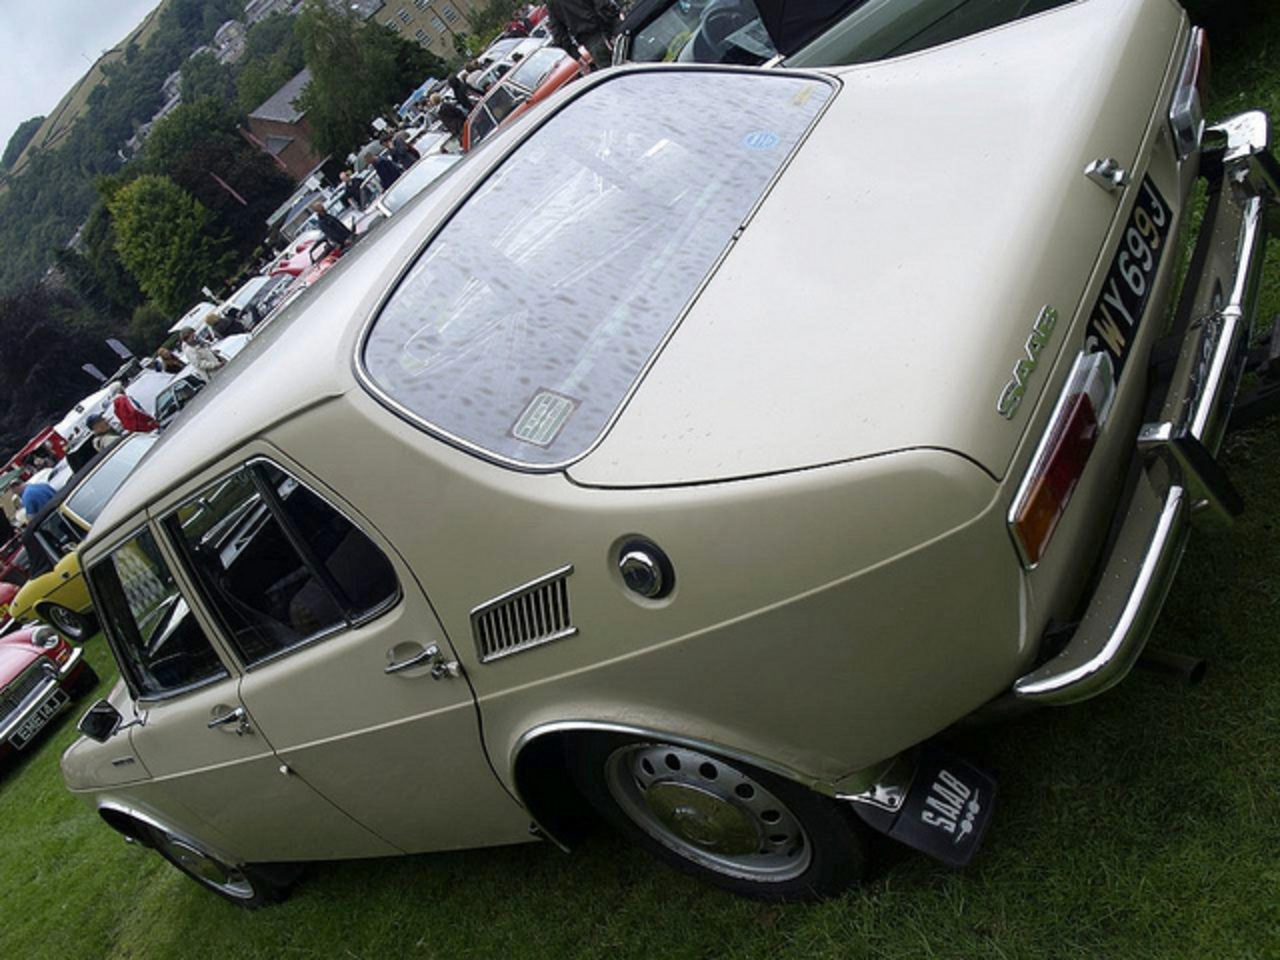 Saab 99 Saloon Cars - 1970 | Flickr - Photo Sharing!